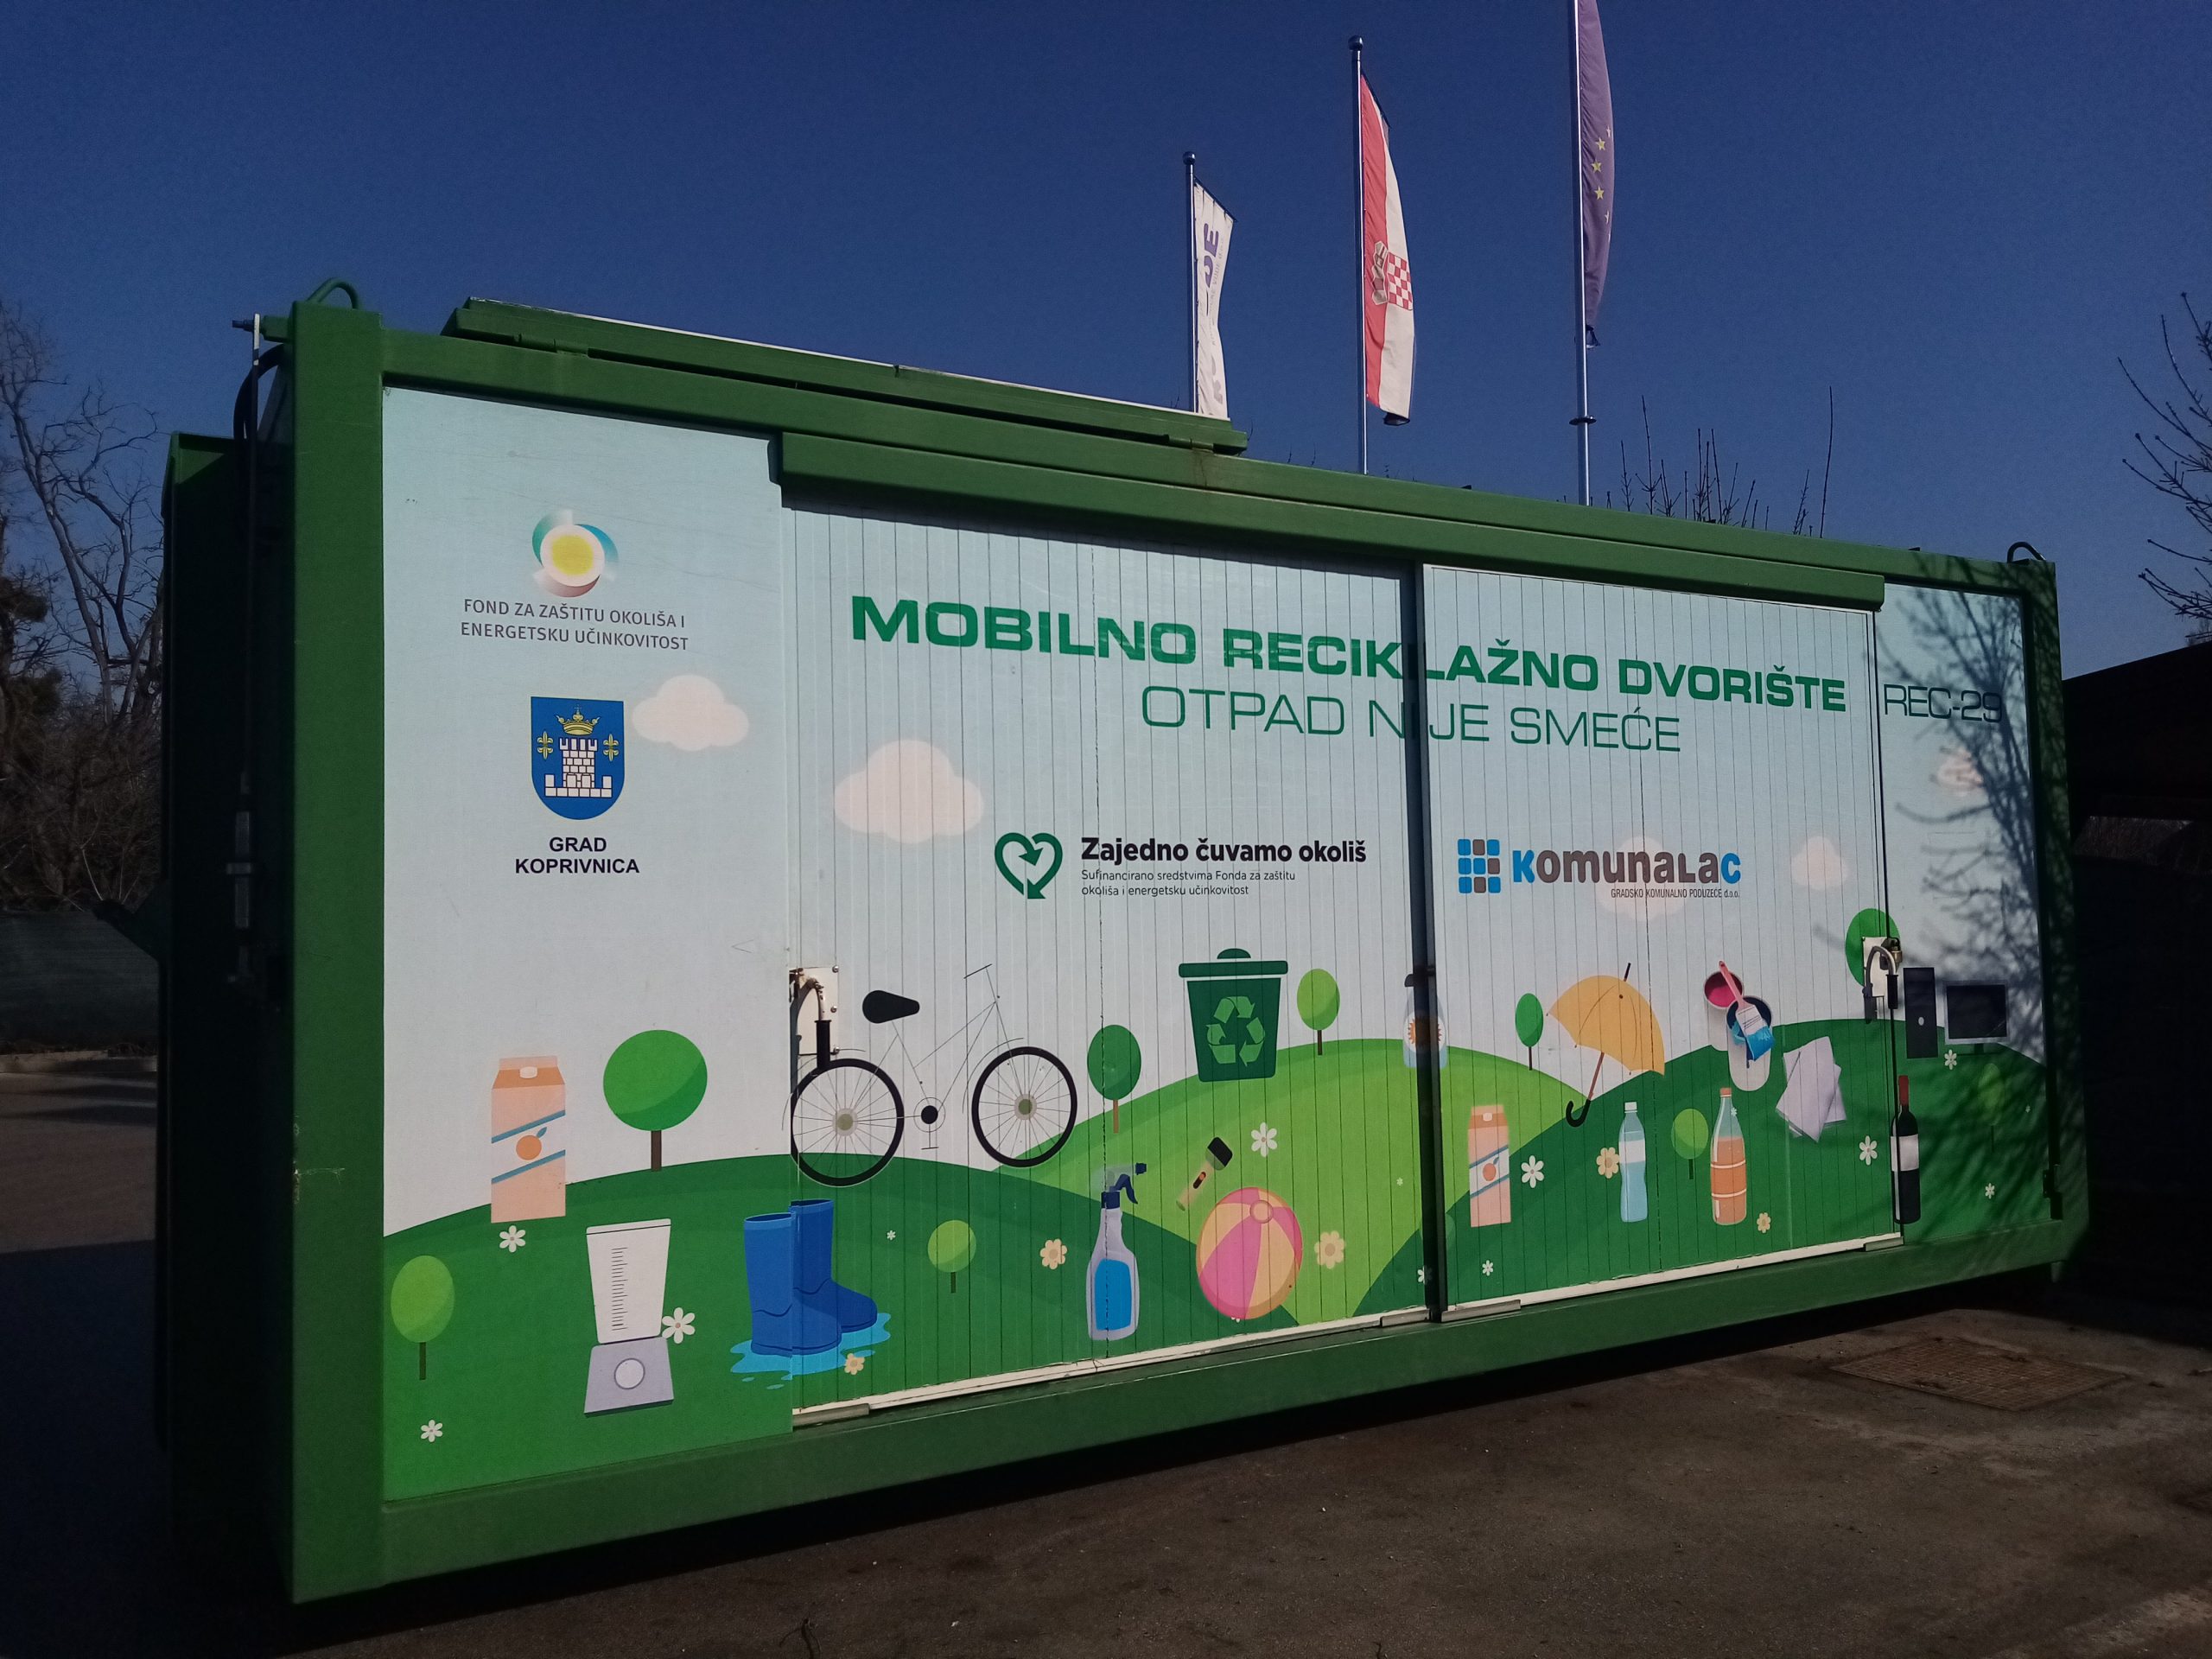 Mobilno reciklažno dvorište u utorak, 8. ožujka, nalazit će se u Koprivničkom Ivancu